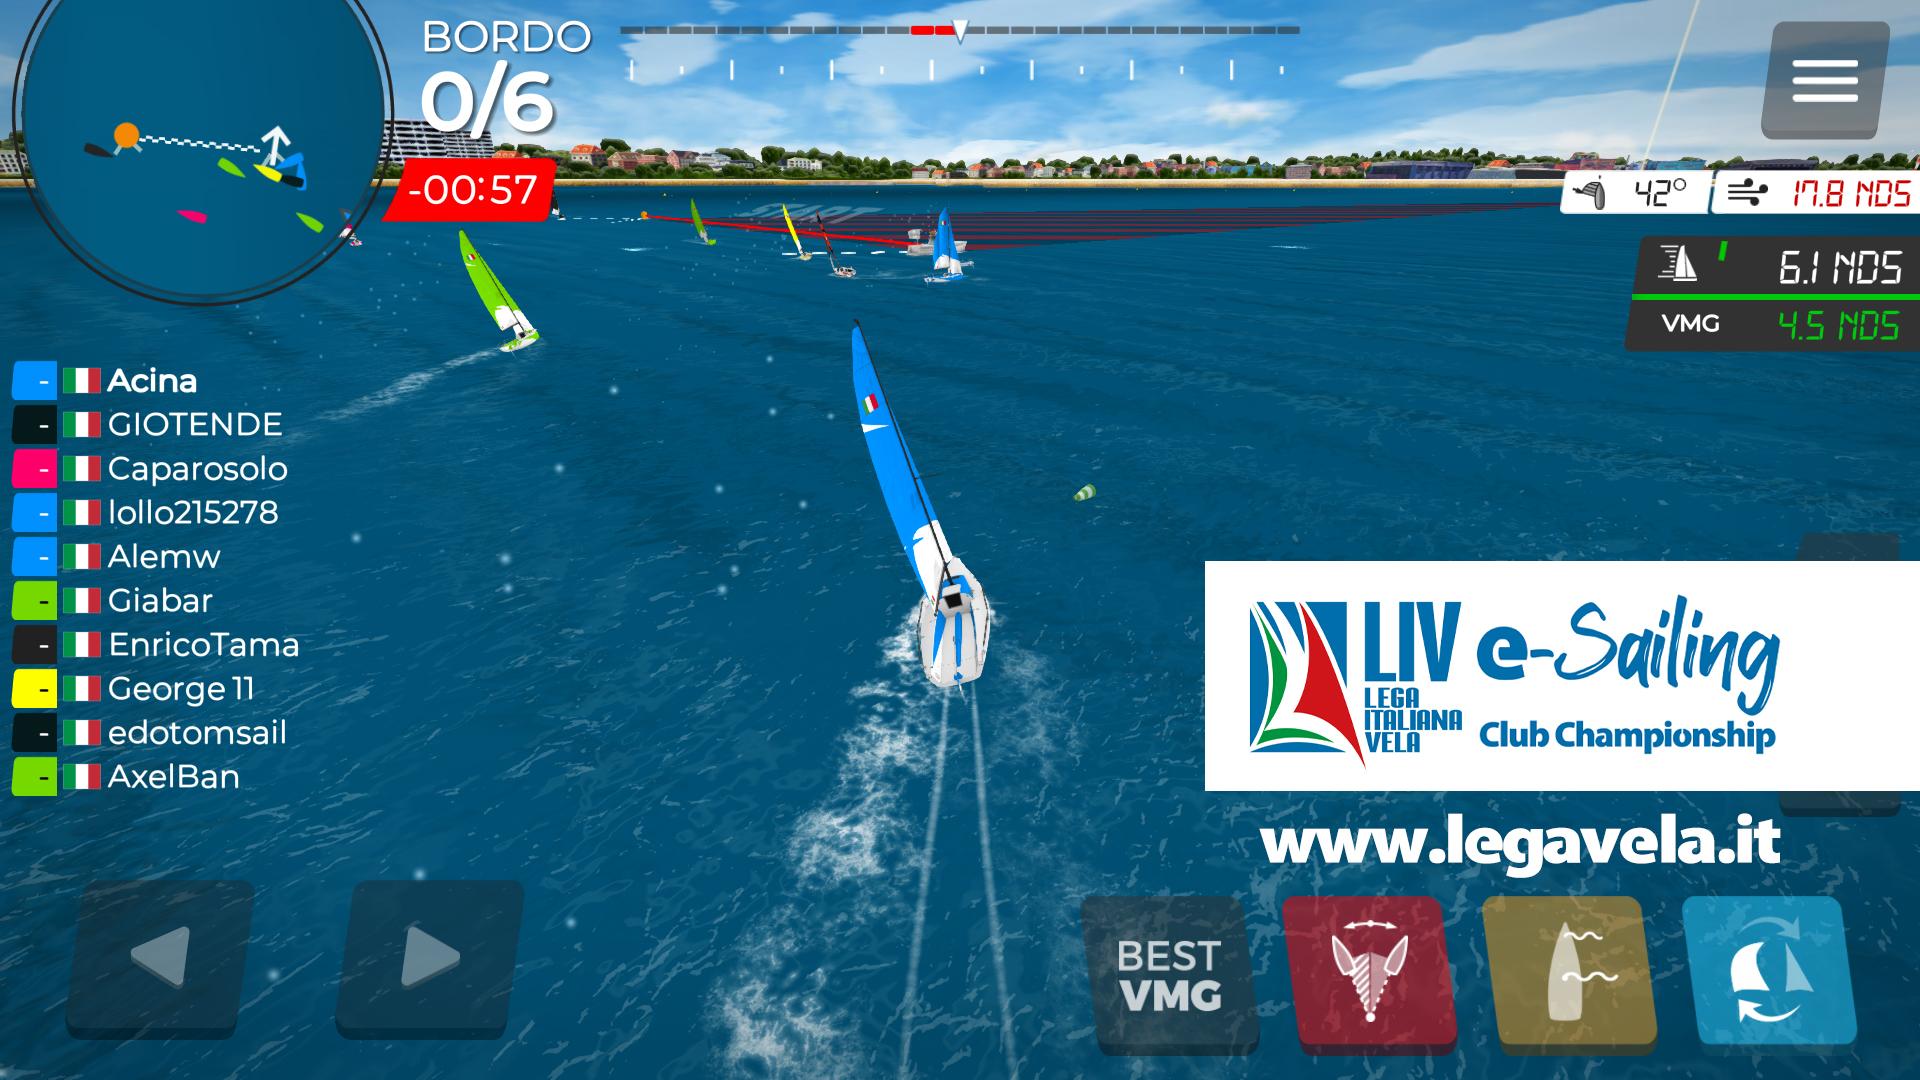 LIVe-Sailing Club Championship, parte la regata virtuale per club